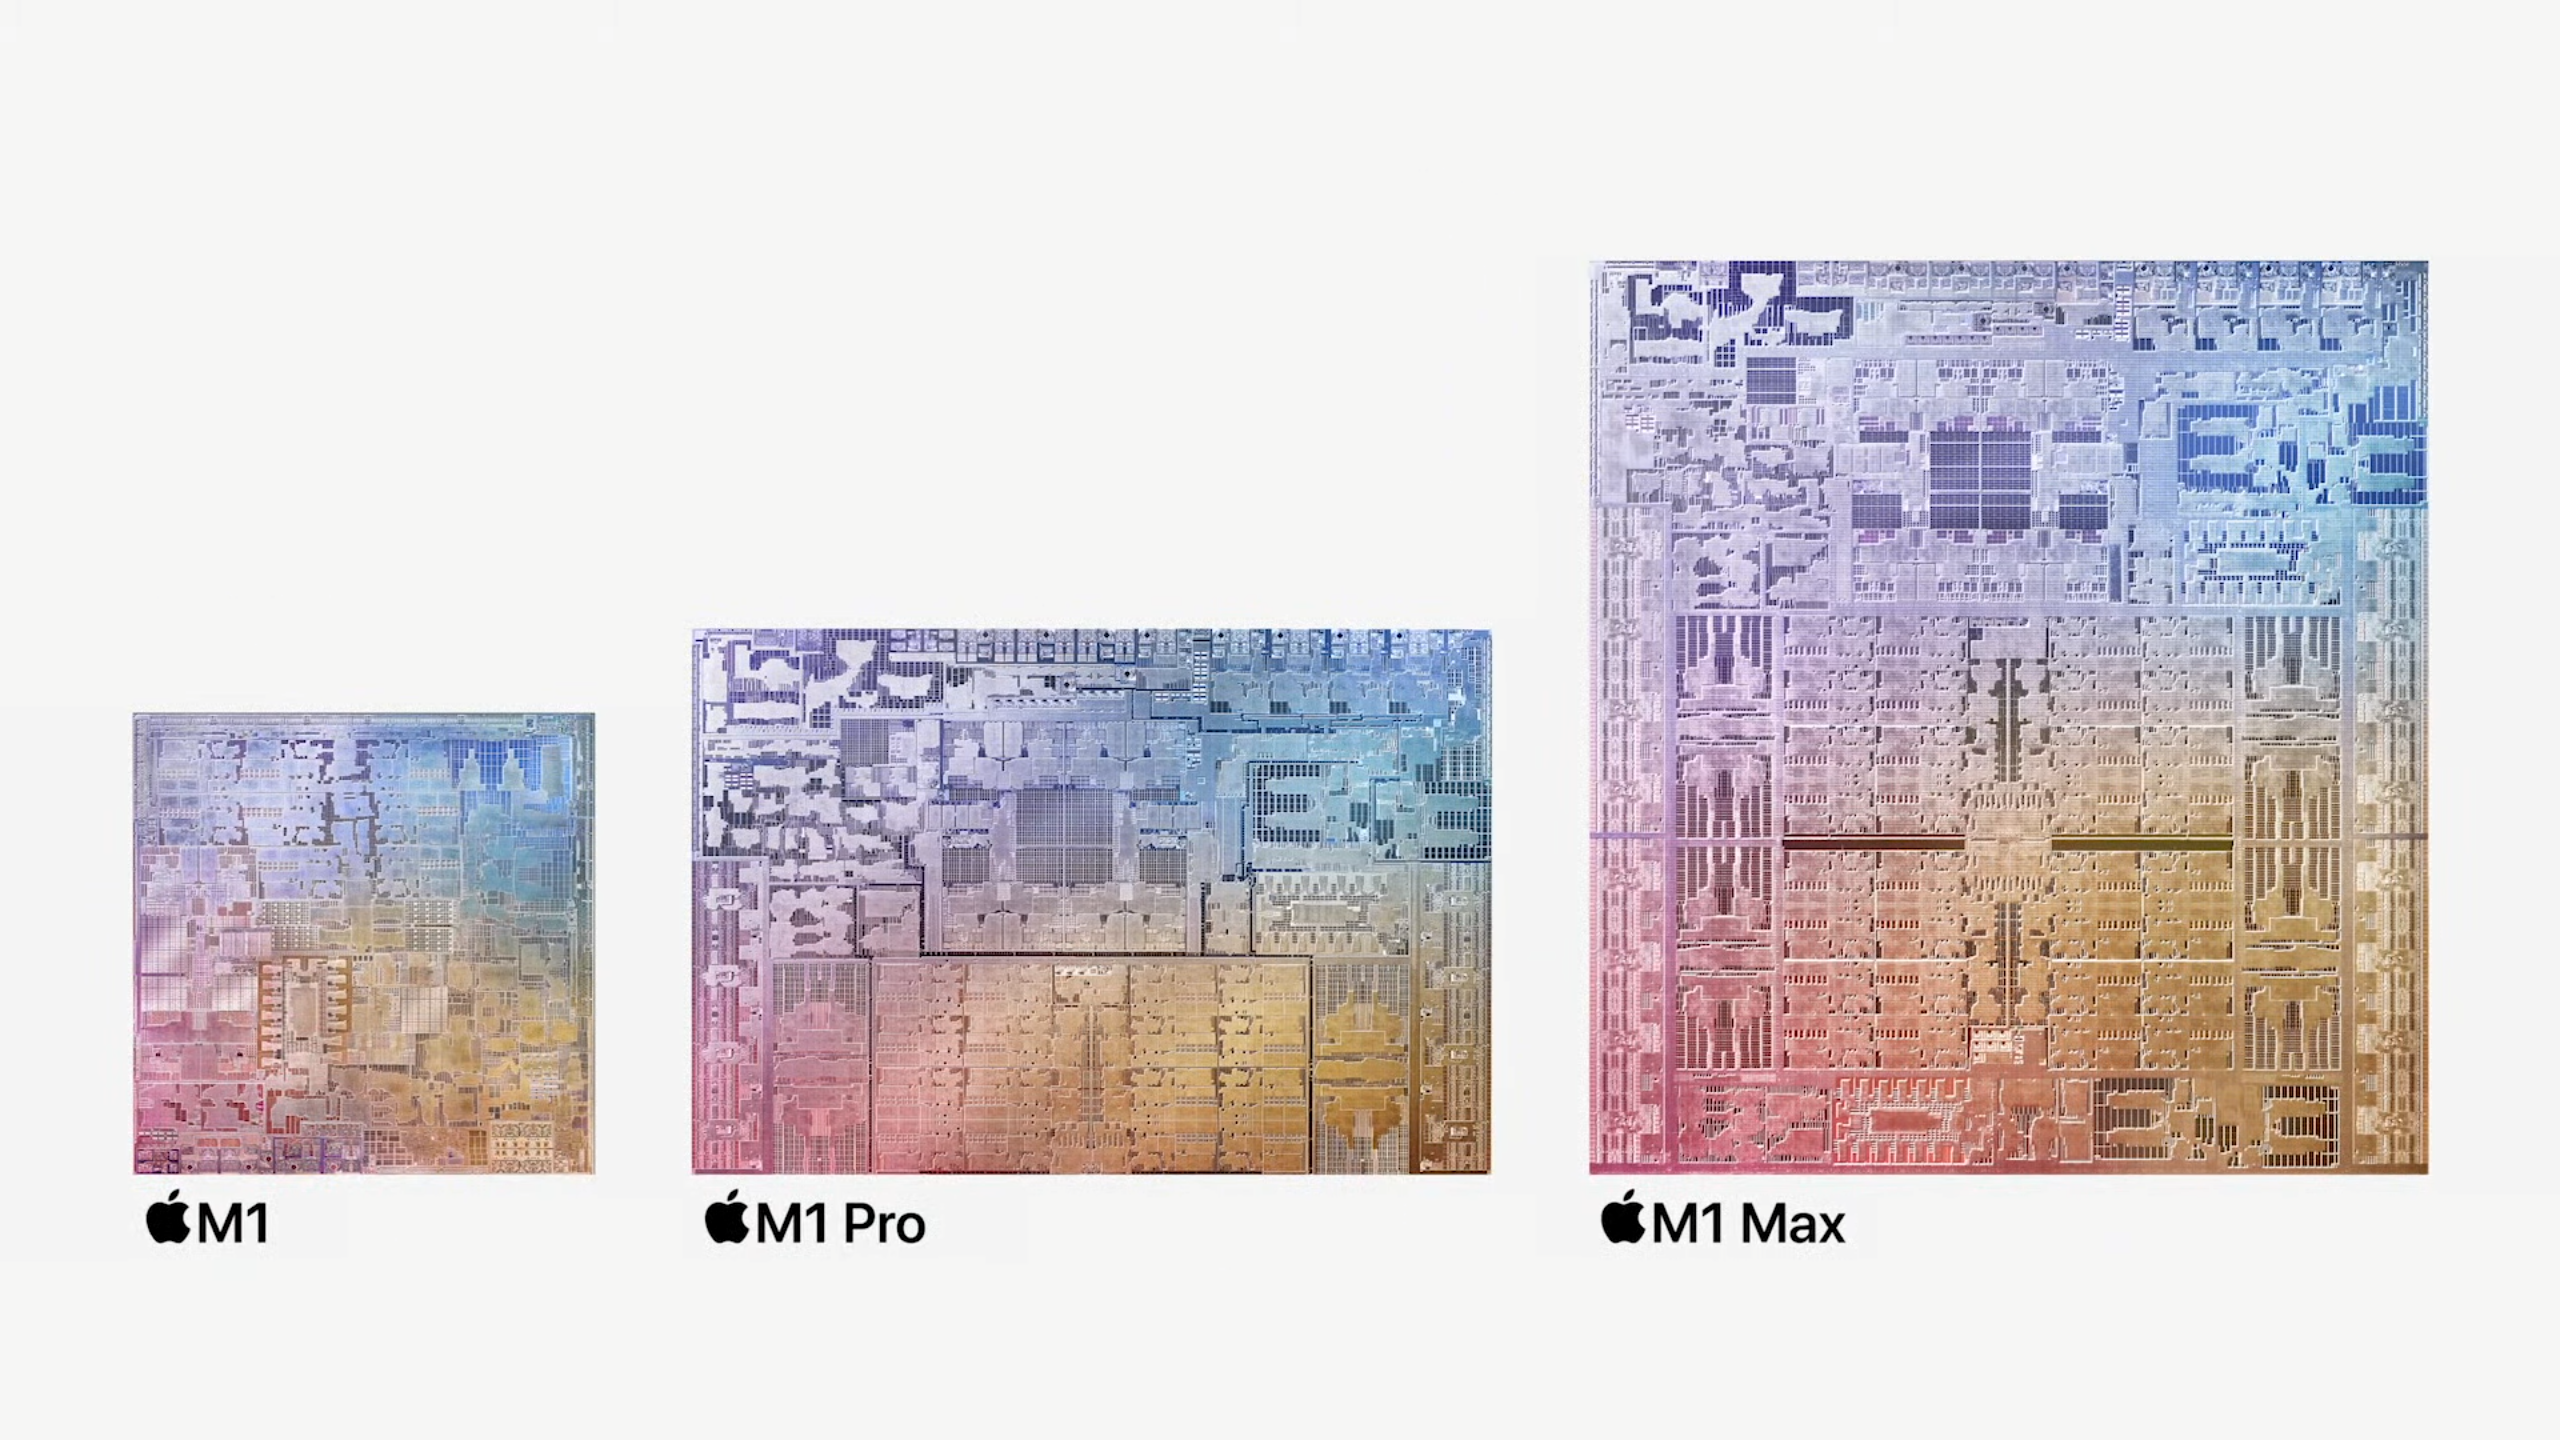 M1 Pro MacBook Pro: Specs, features, chip, price